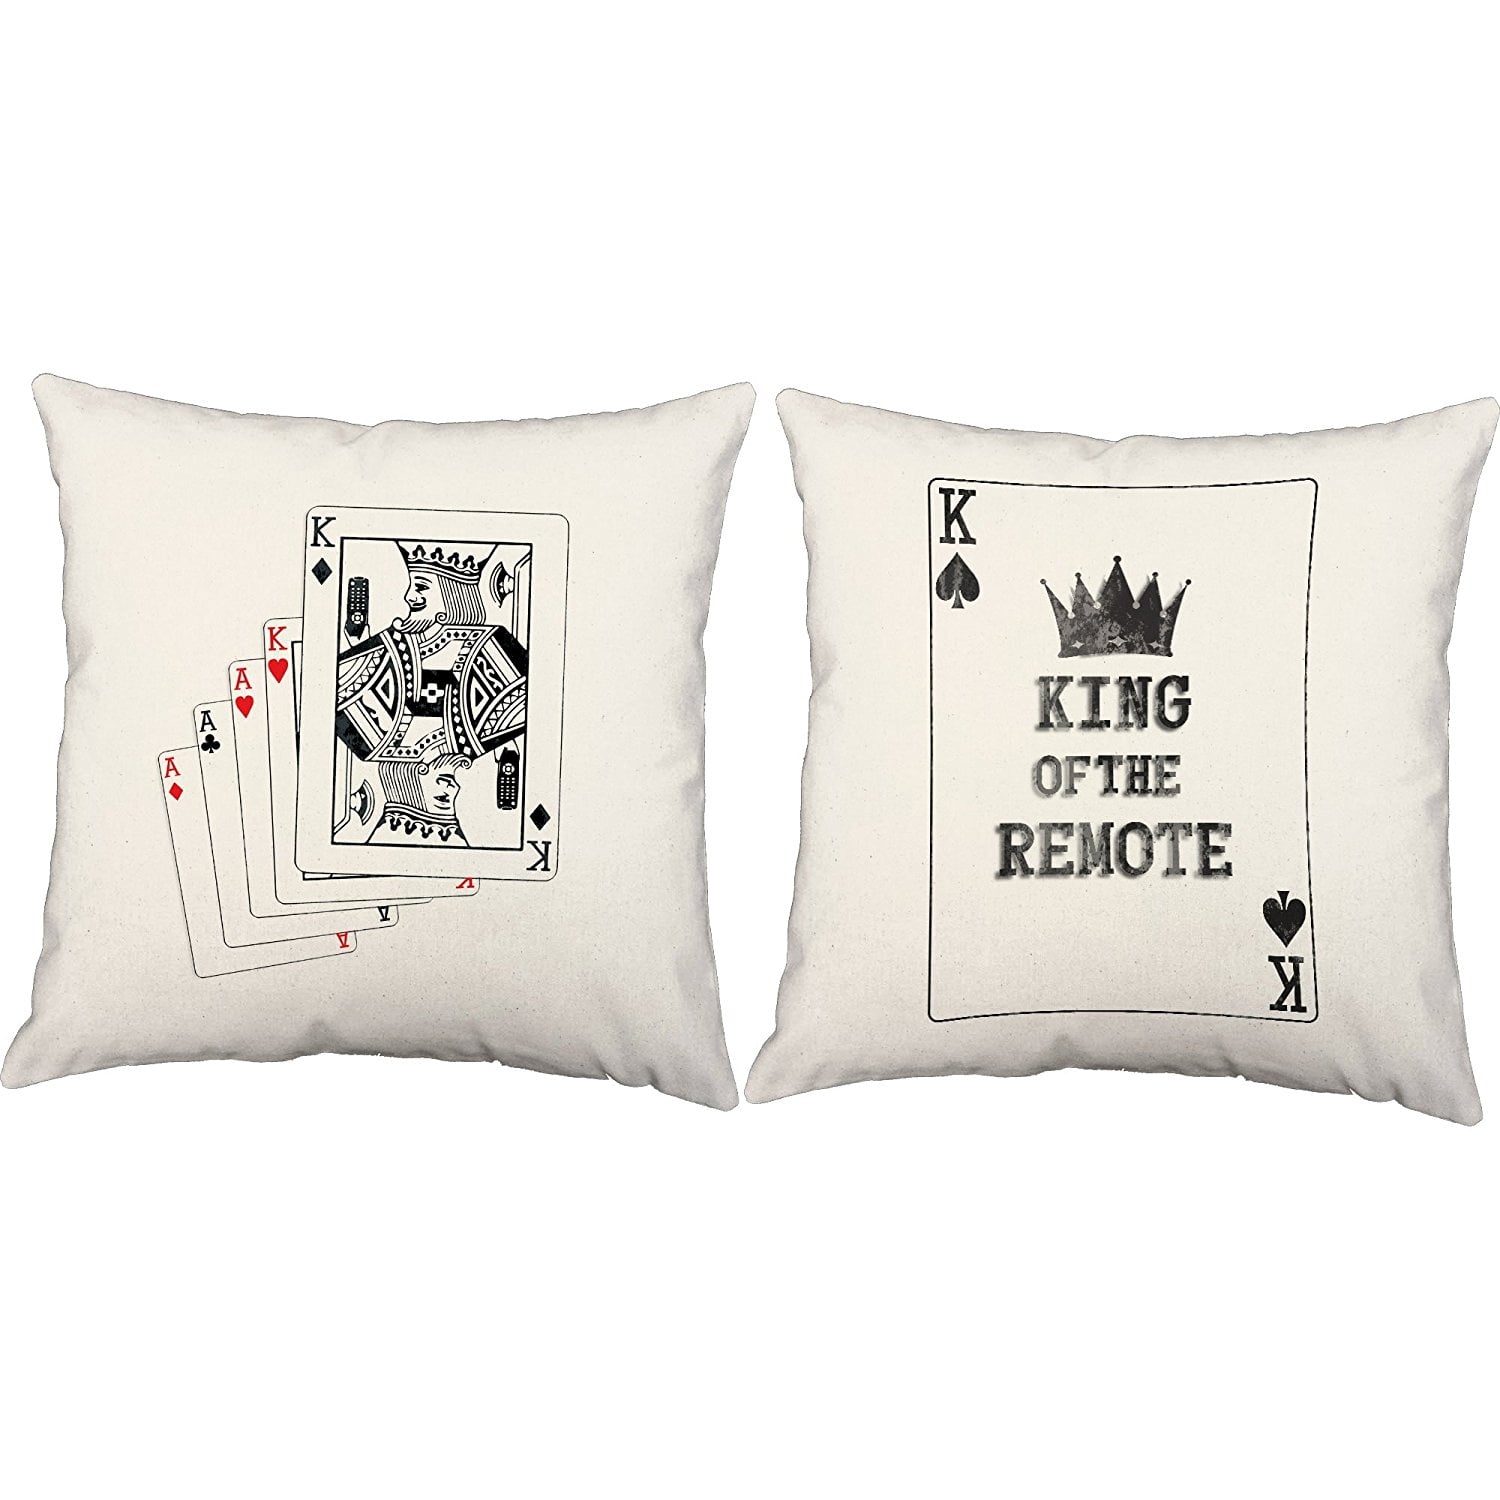 king square pillows